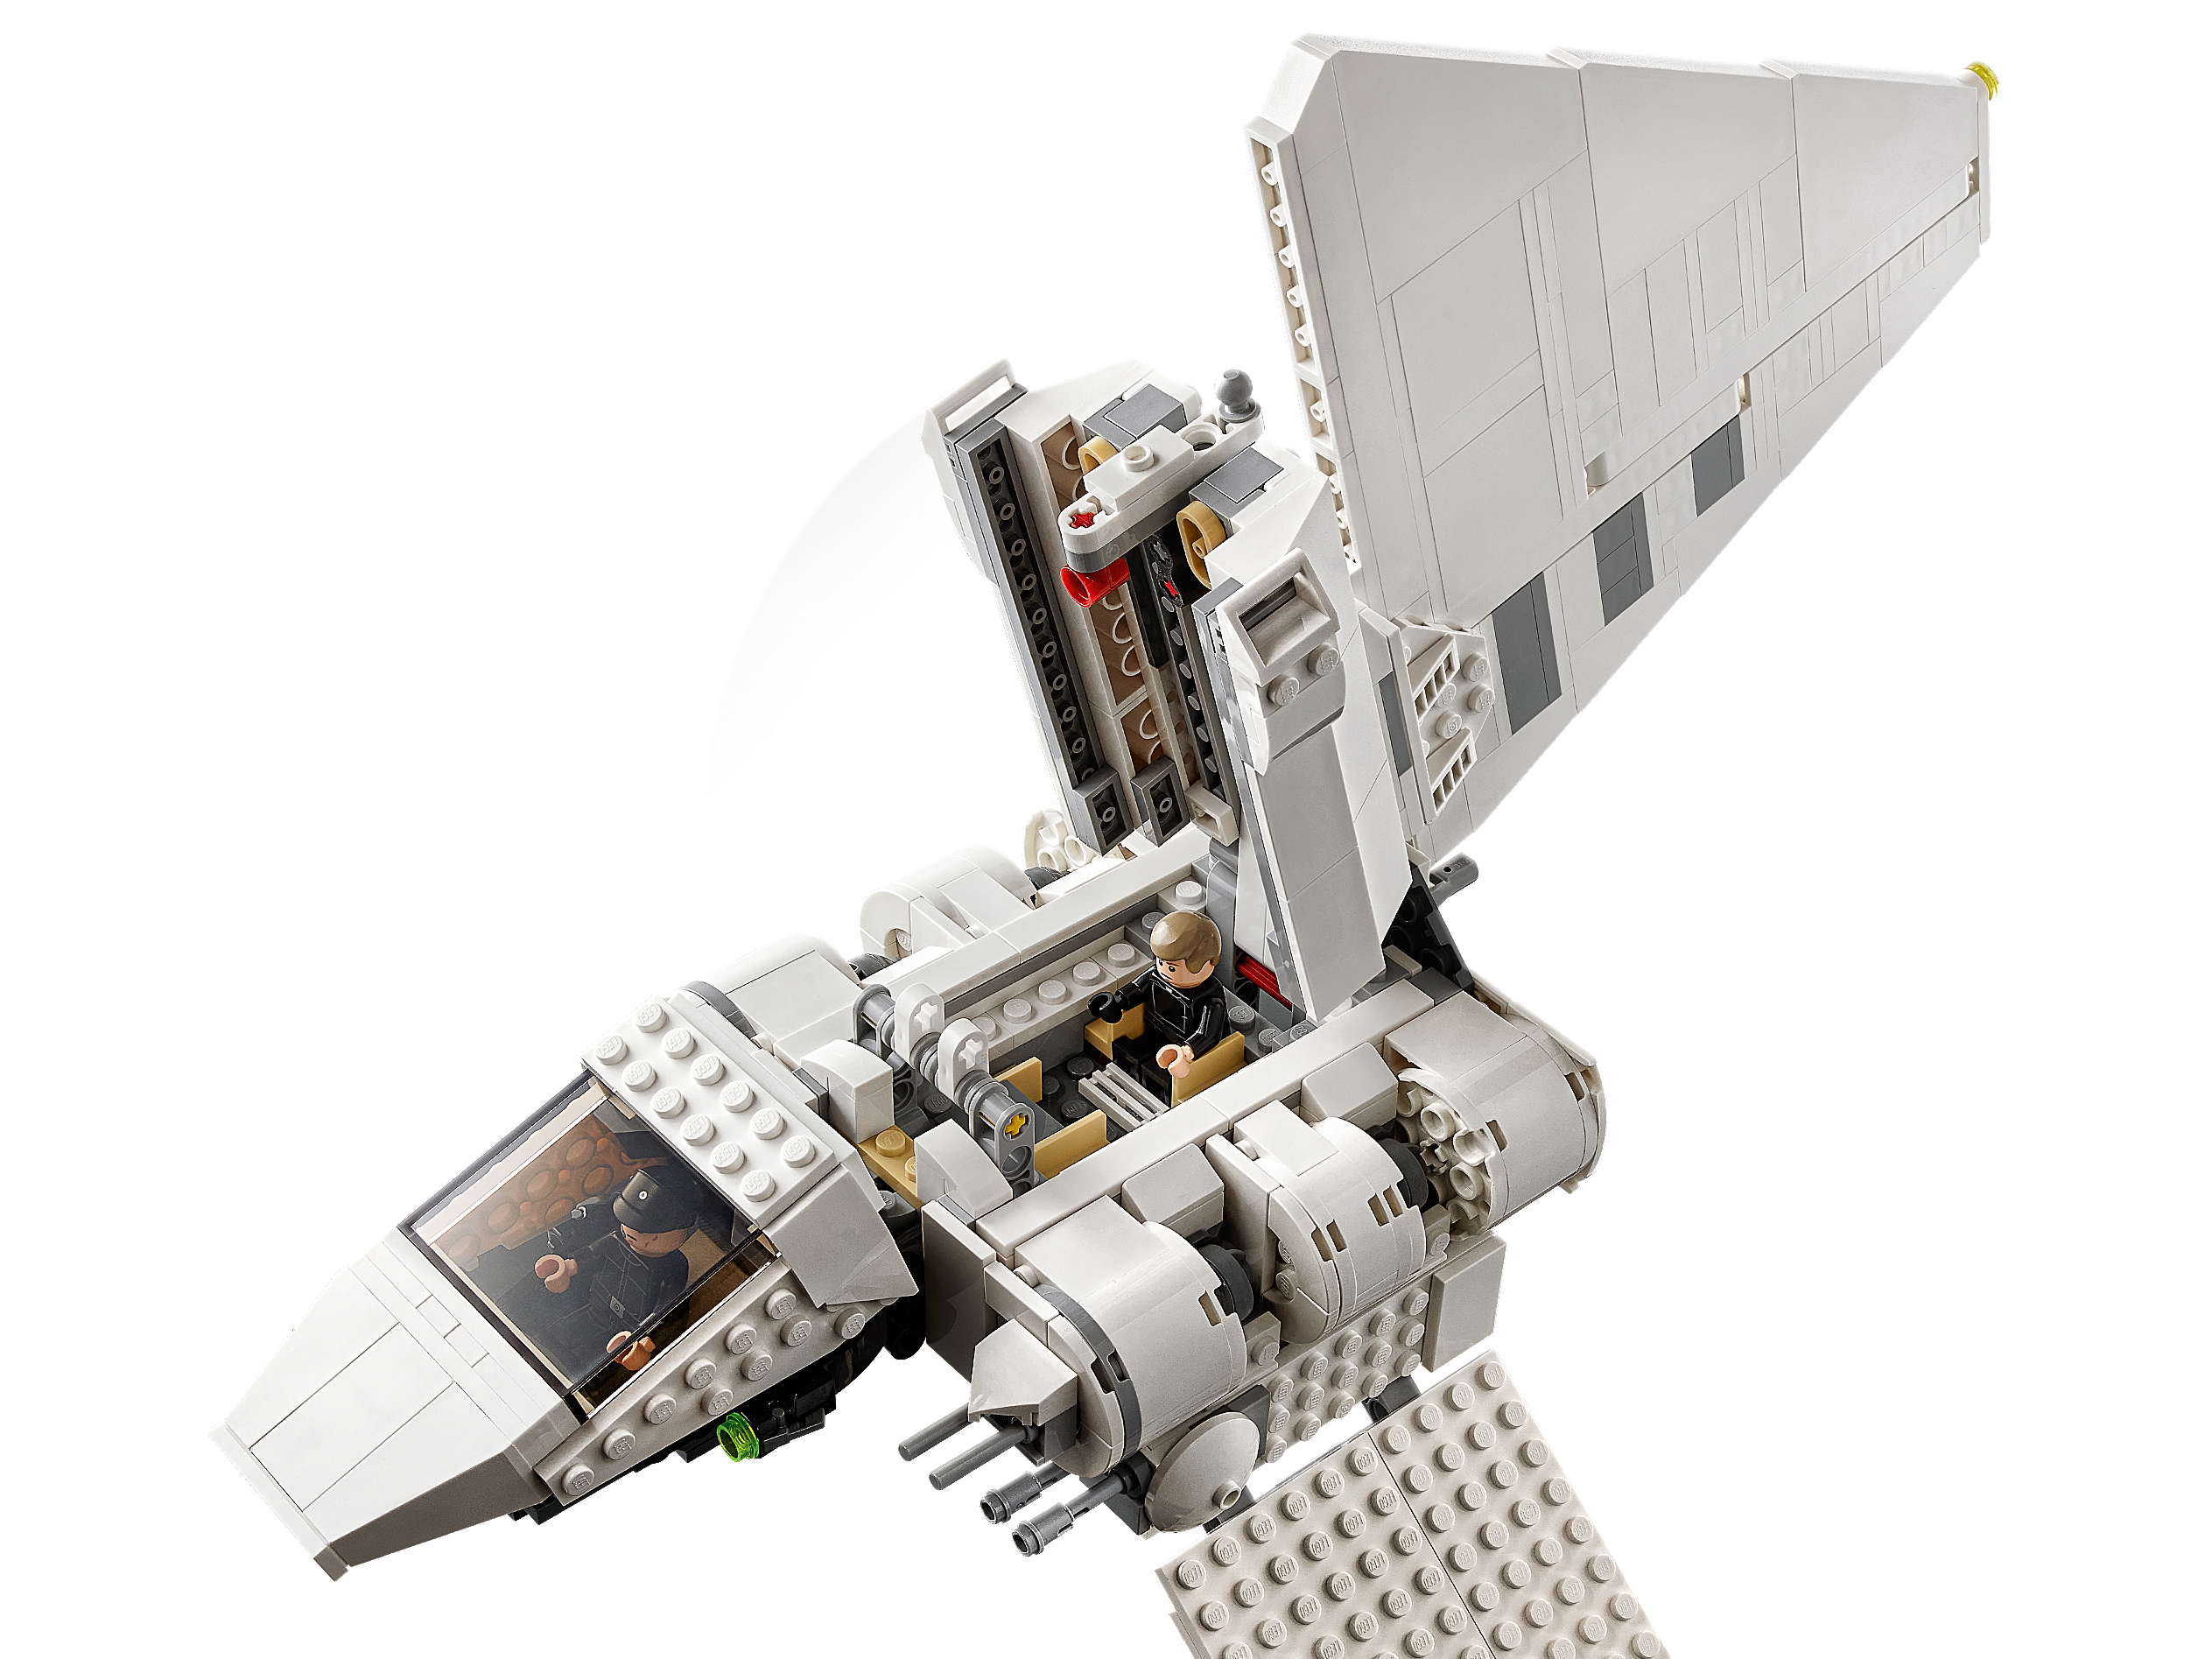 75302 LEGO Star Wars Imperial Shuttle